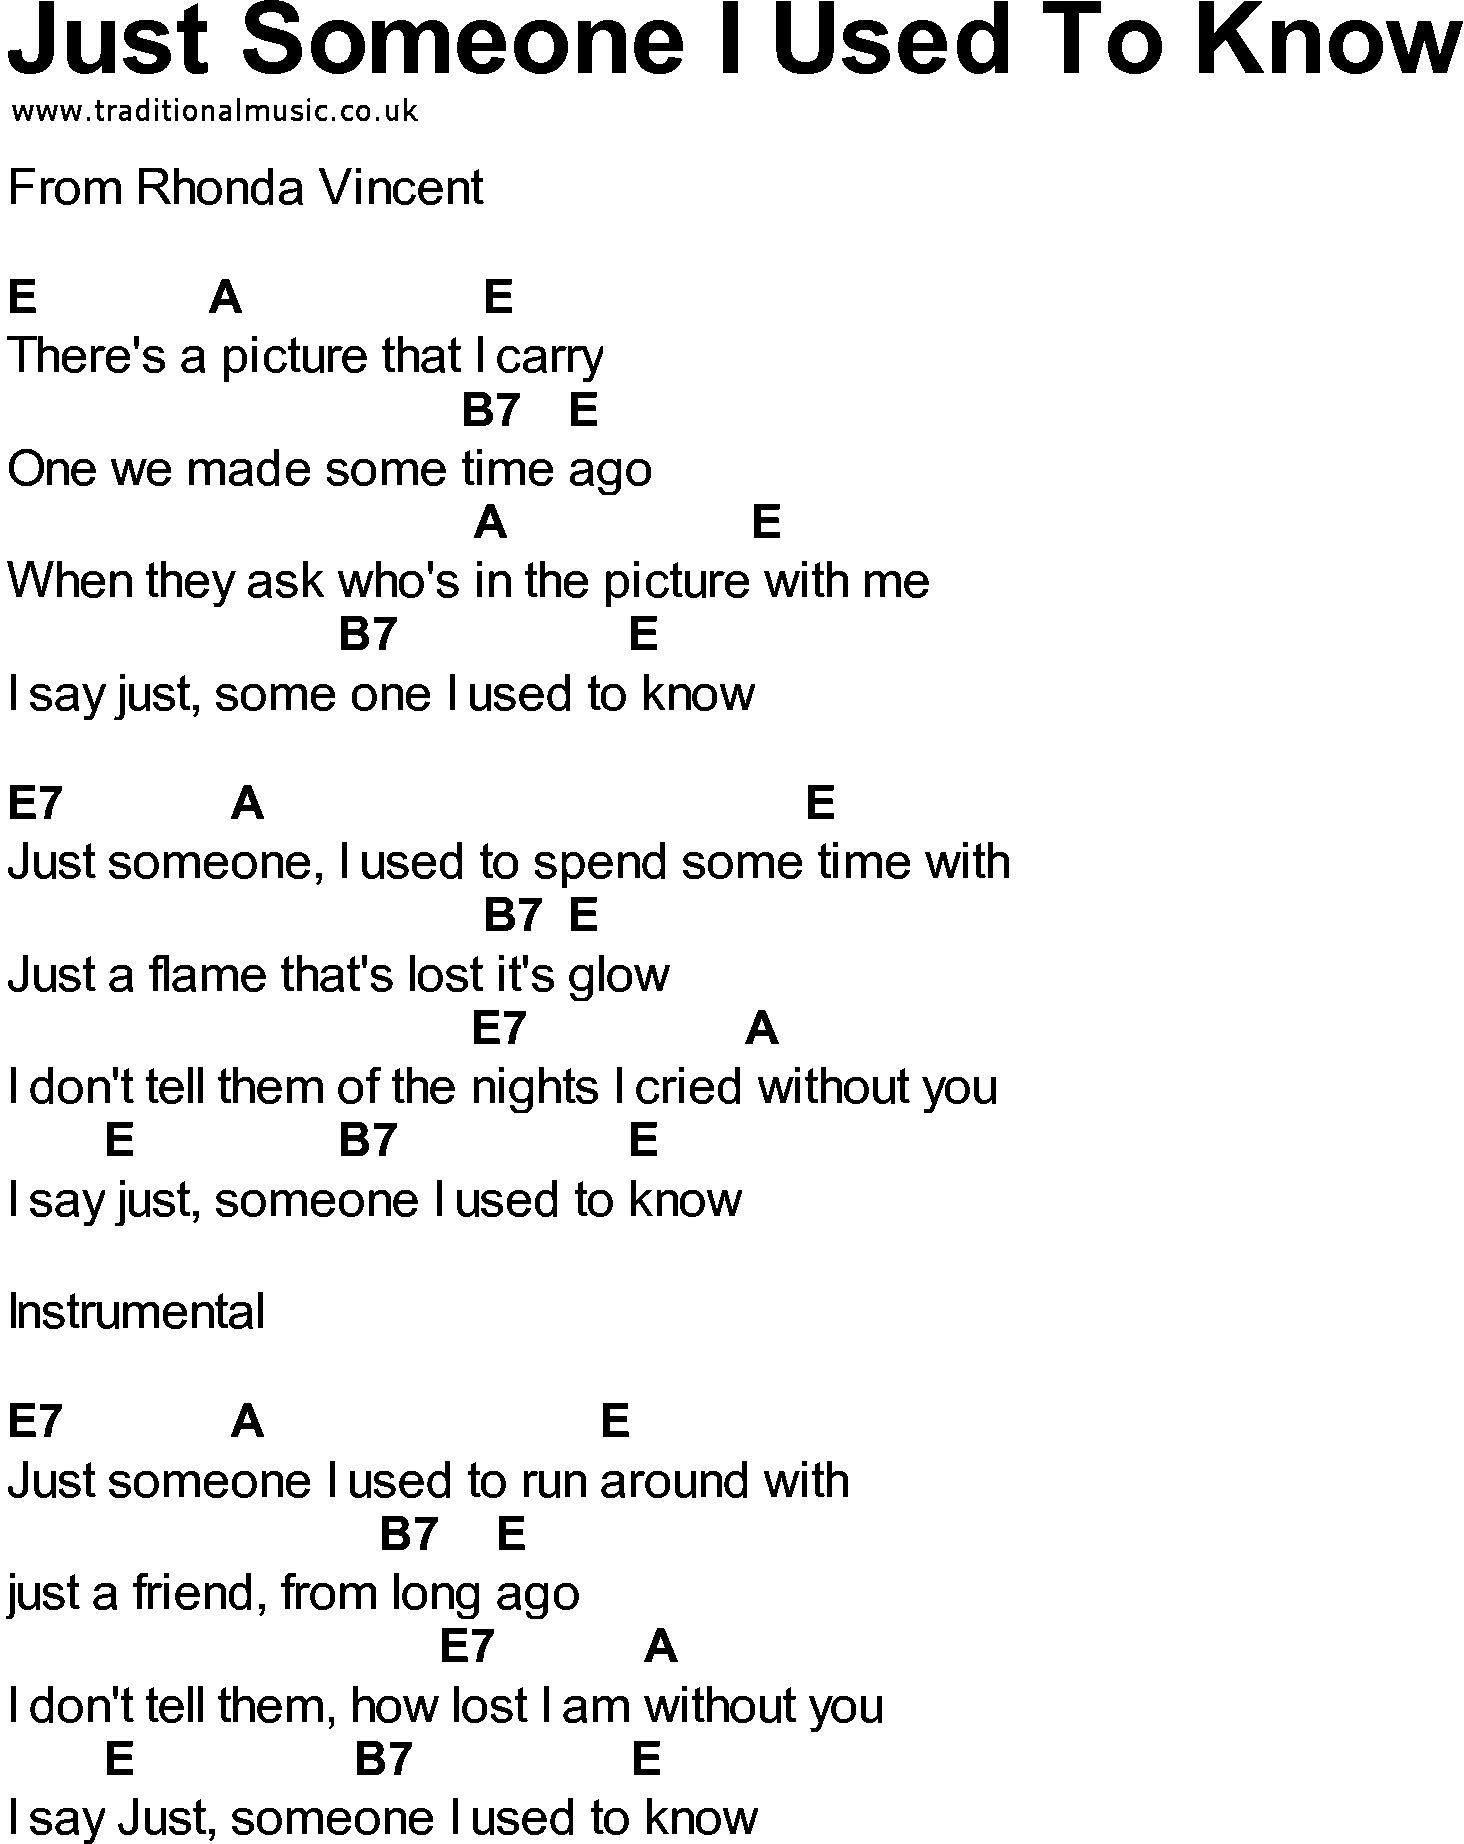 Song For Someone Lyrics | myideasbedroom.com